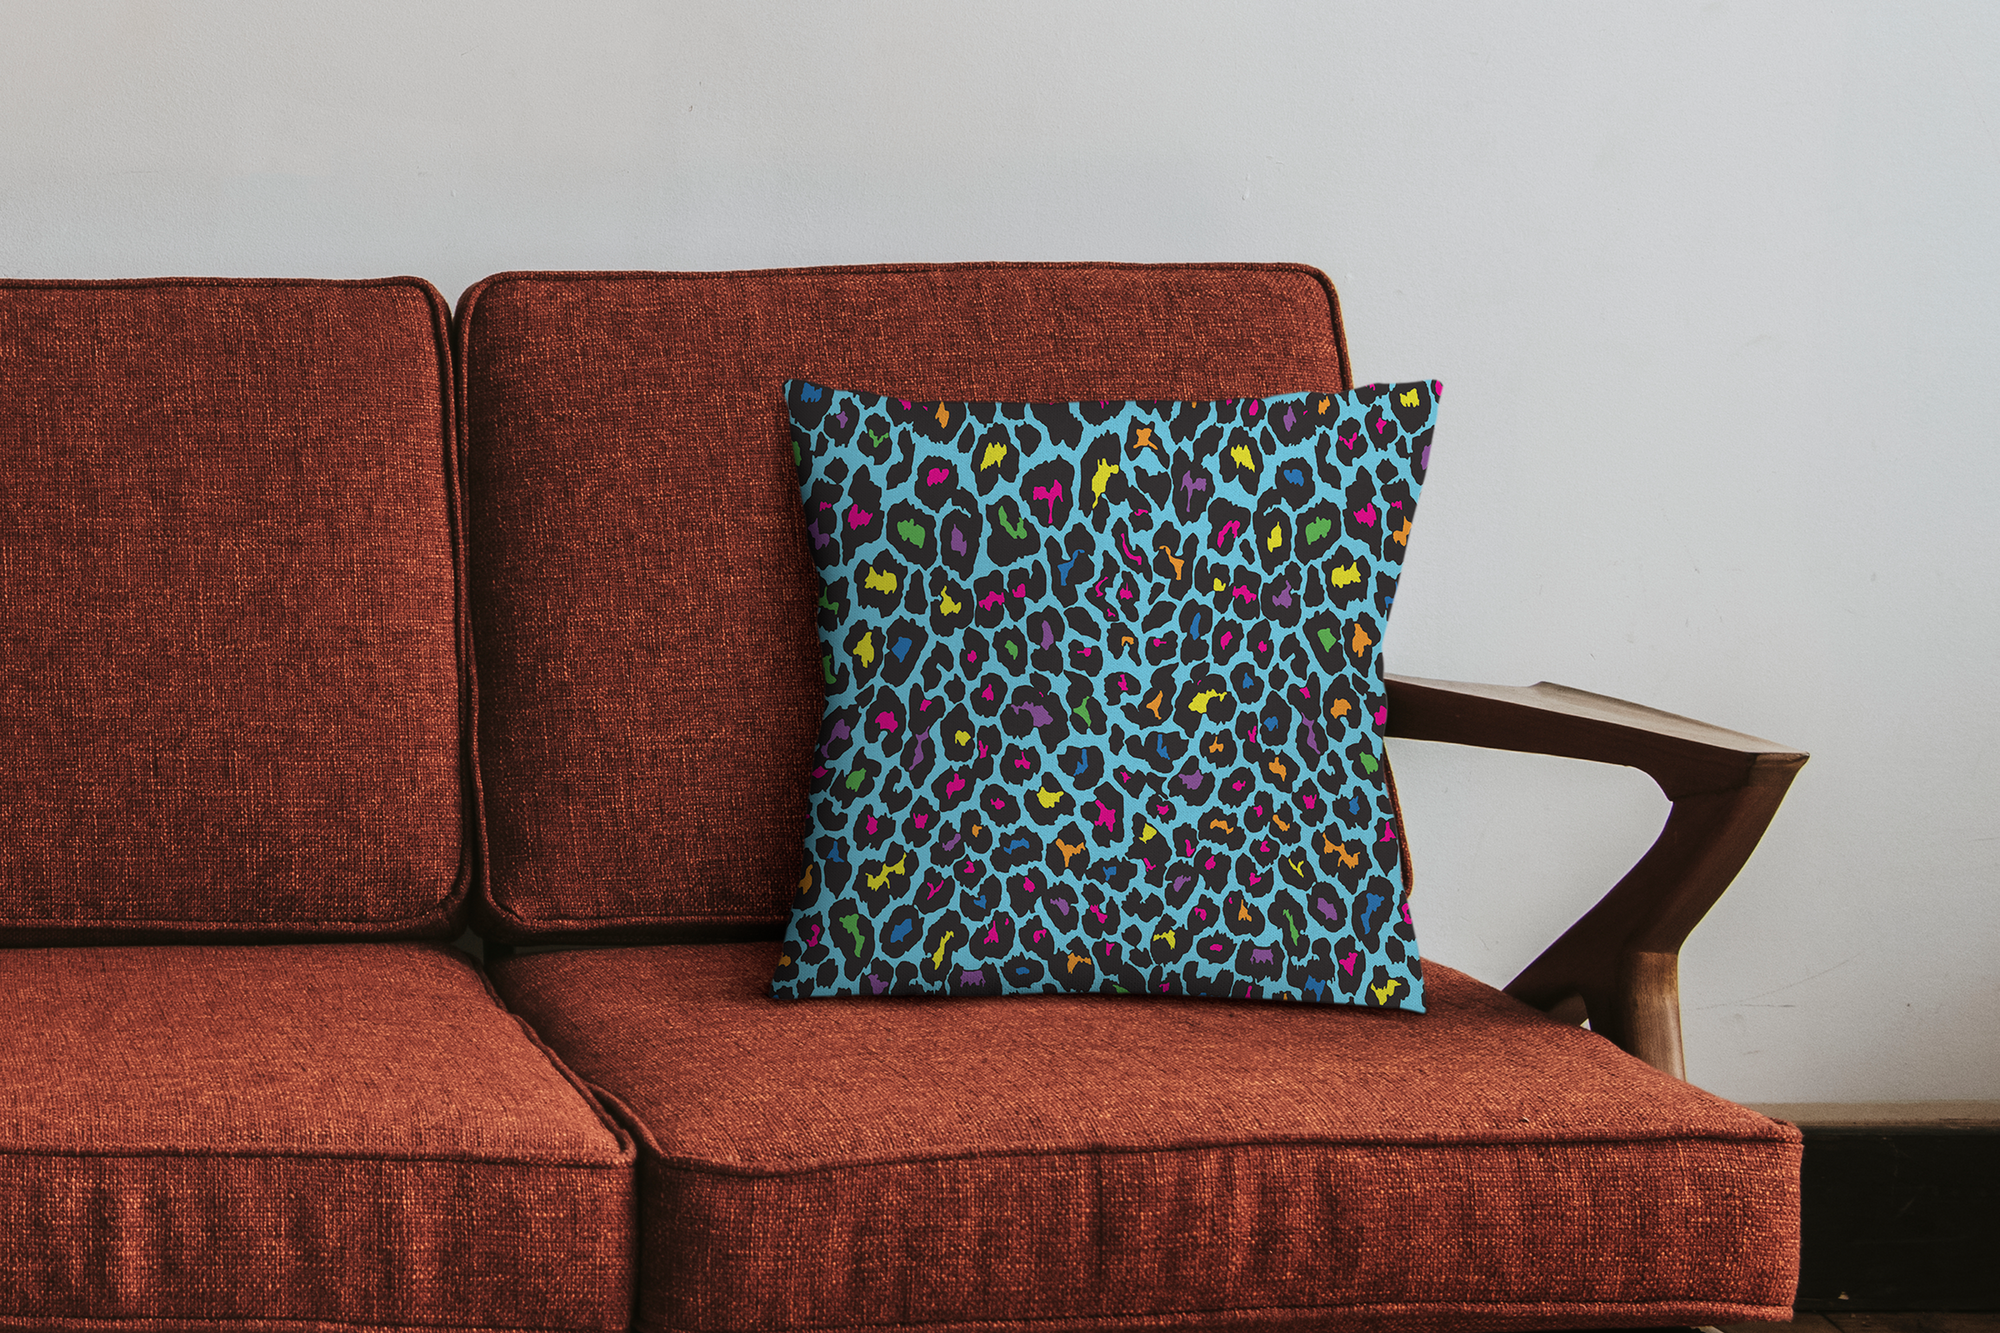 Cushion Cover - 80s Leopard Print